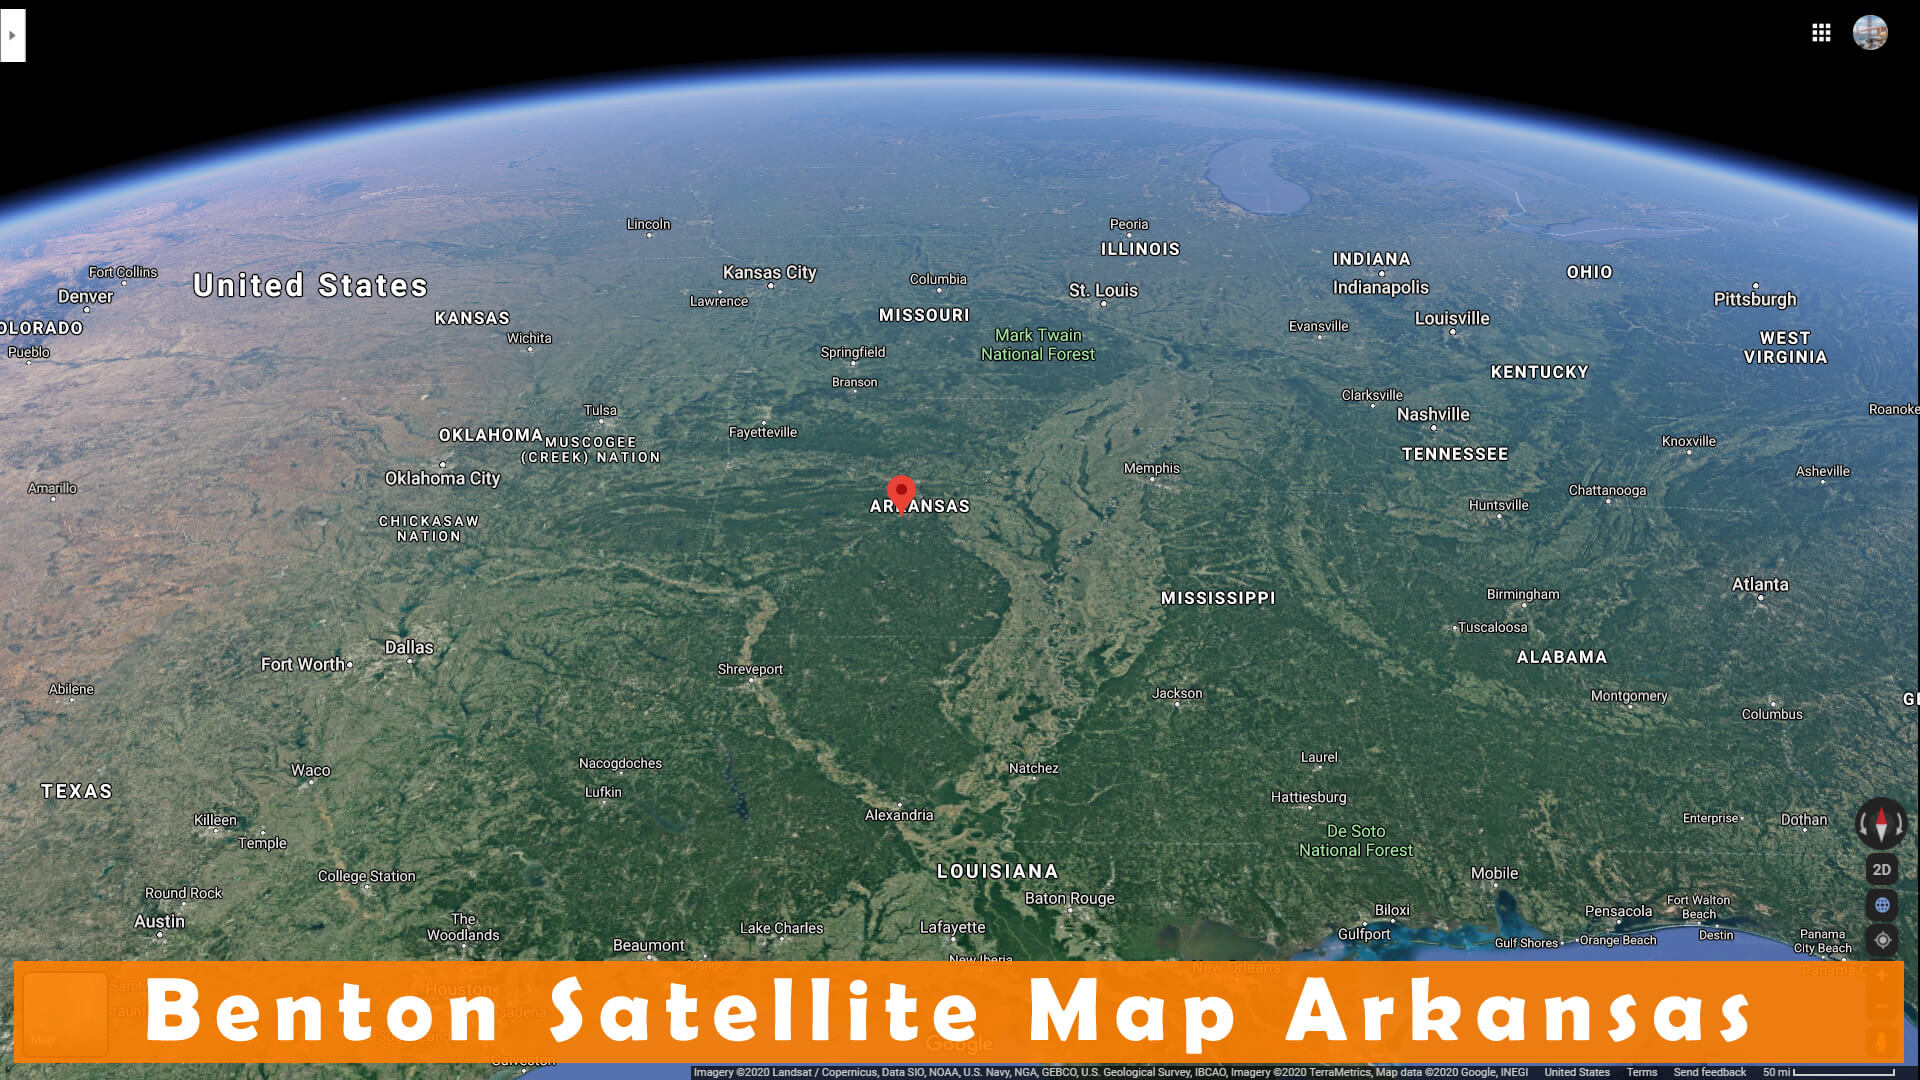 Benton Satellite Map Arkansas